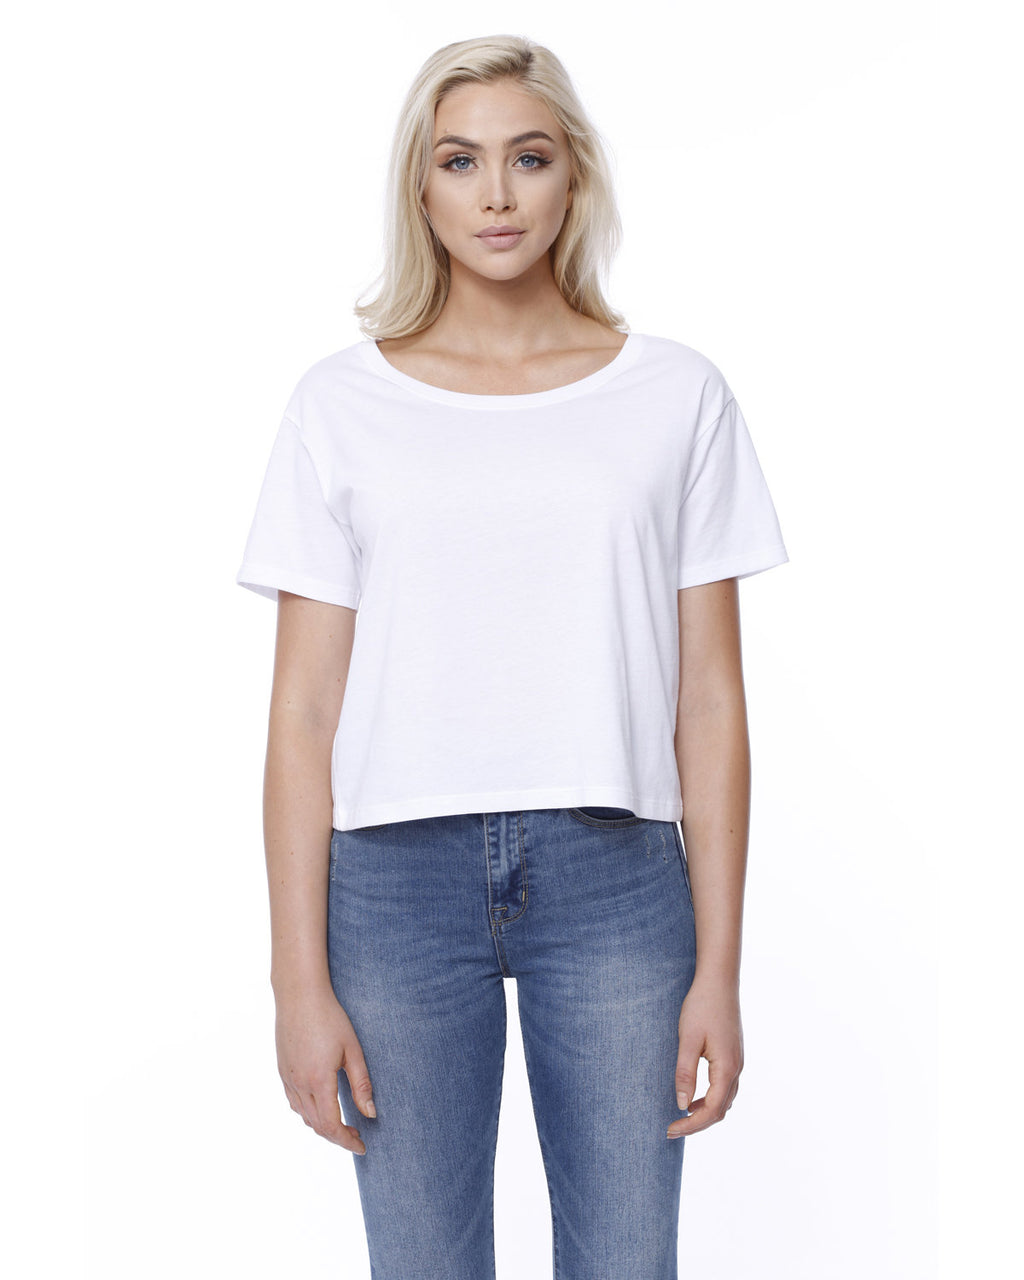 ST1161-StarTee Ladies' Cotton Boxy T-Shirt